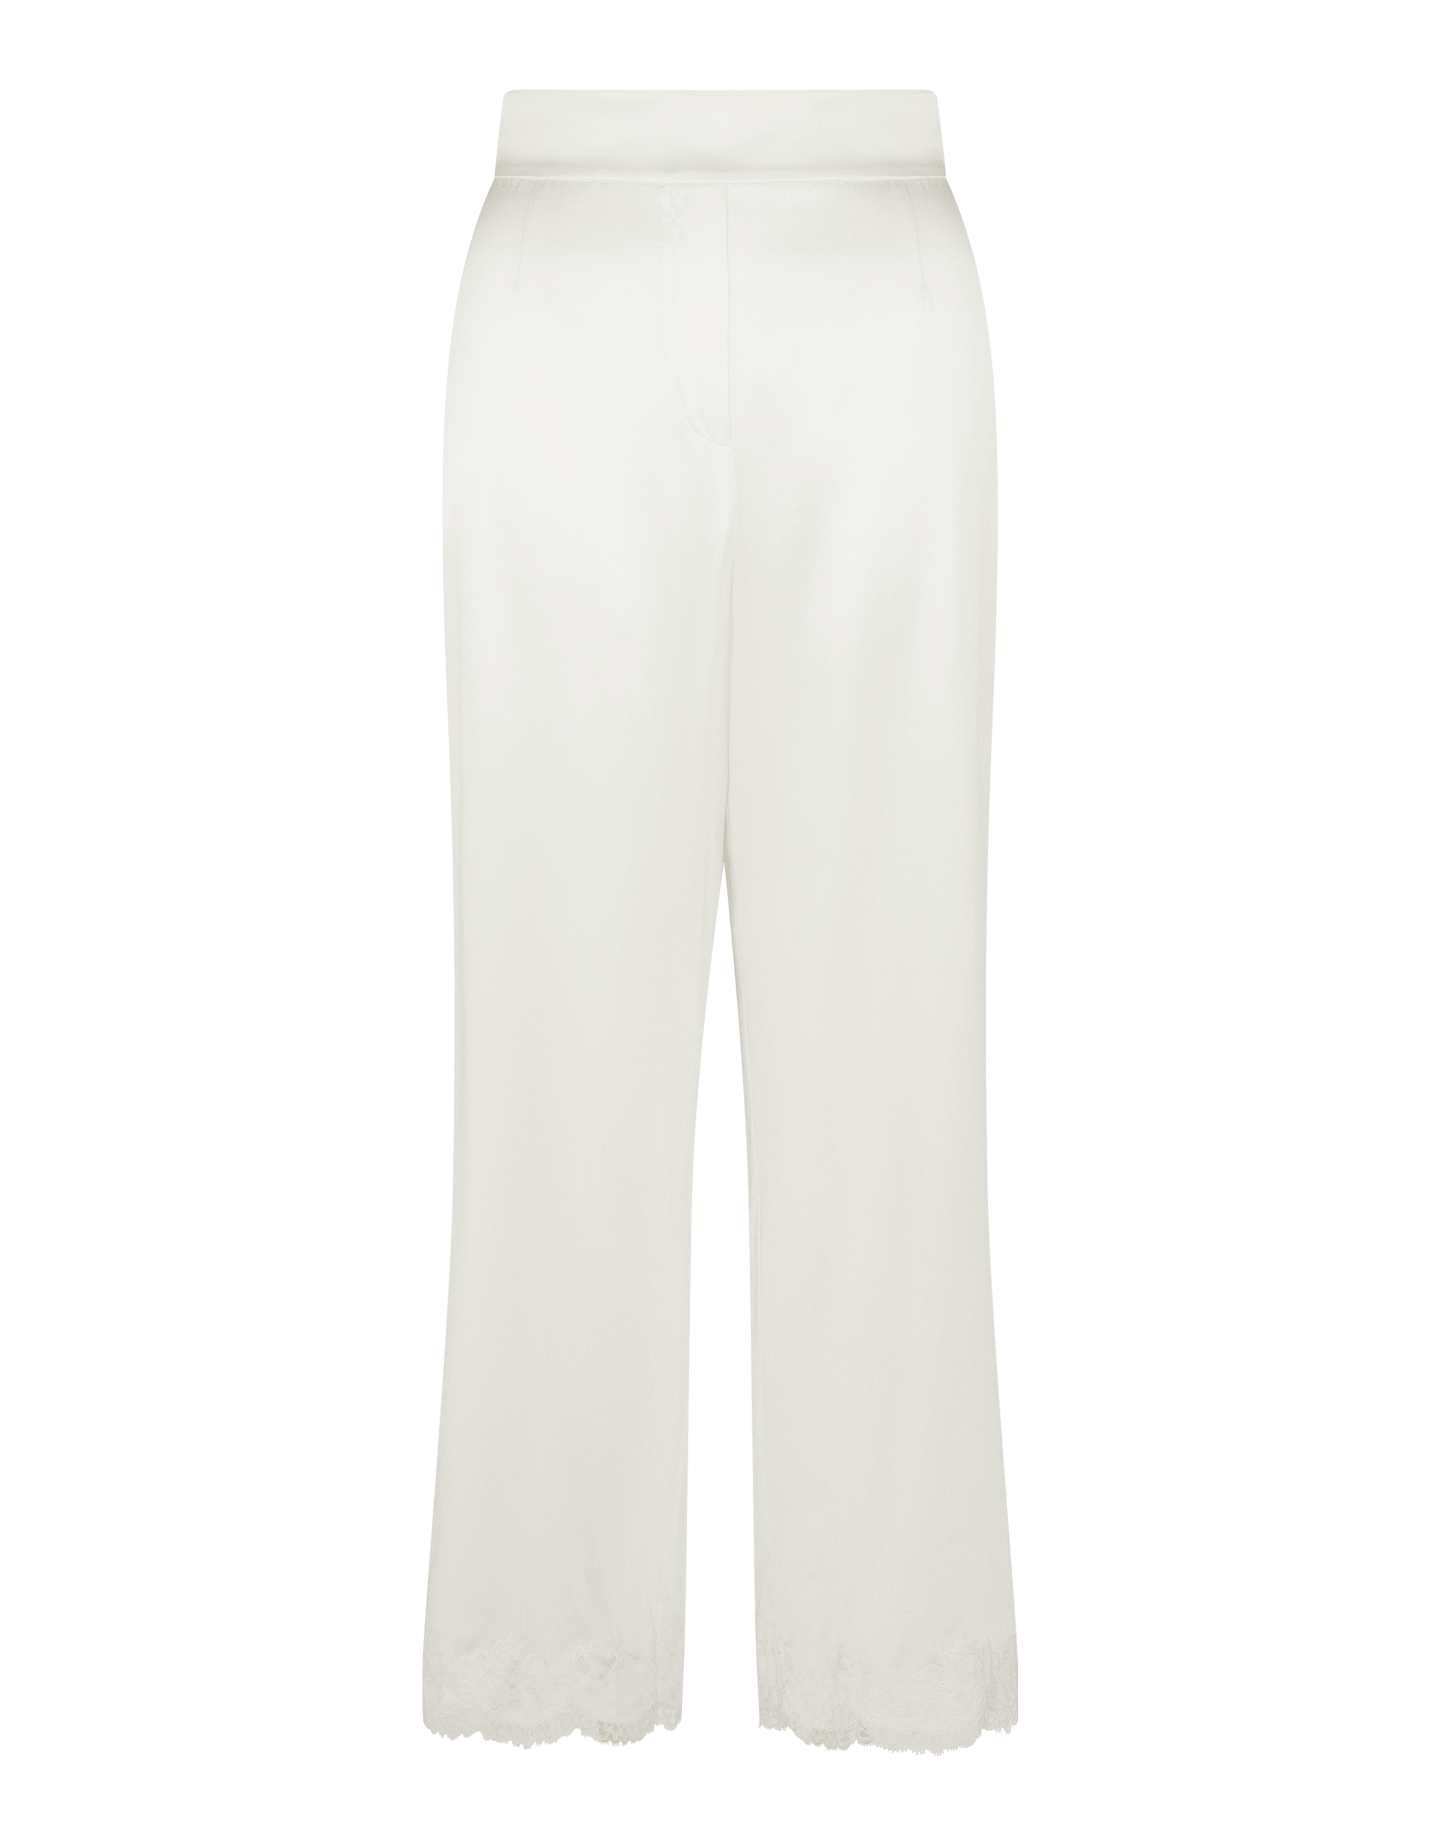 Straight Hole Destruction Trousers Distressed Jeans Men Denim Trousers  Fashion Designer Brand White Pants Male Large Size 28-42